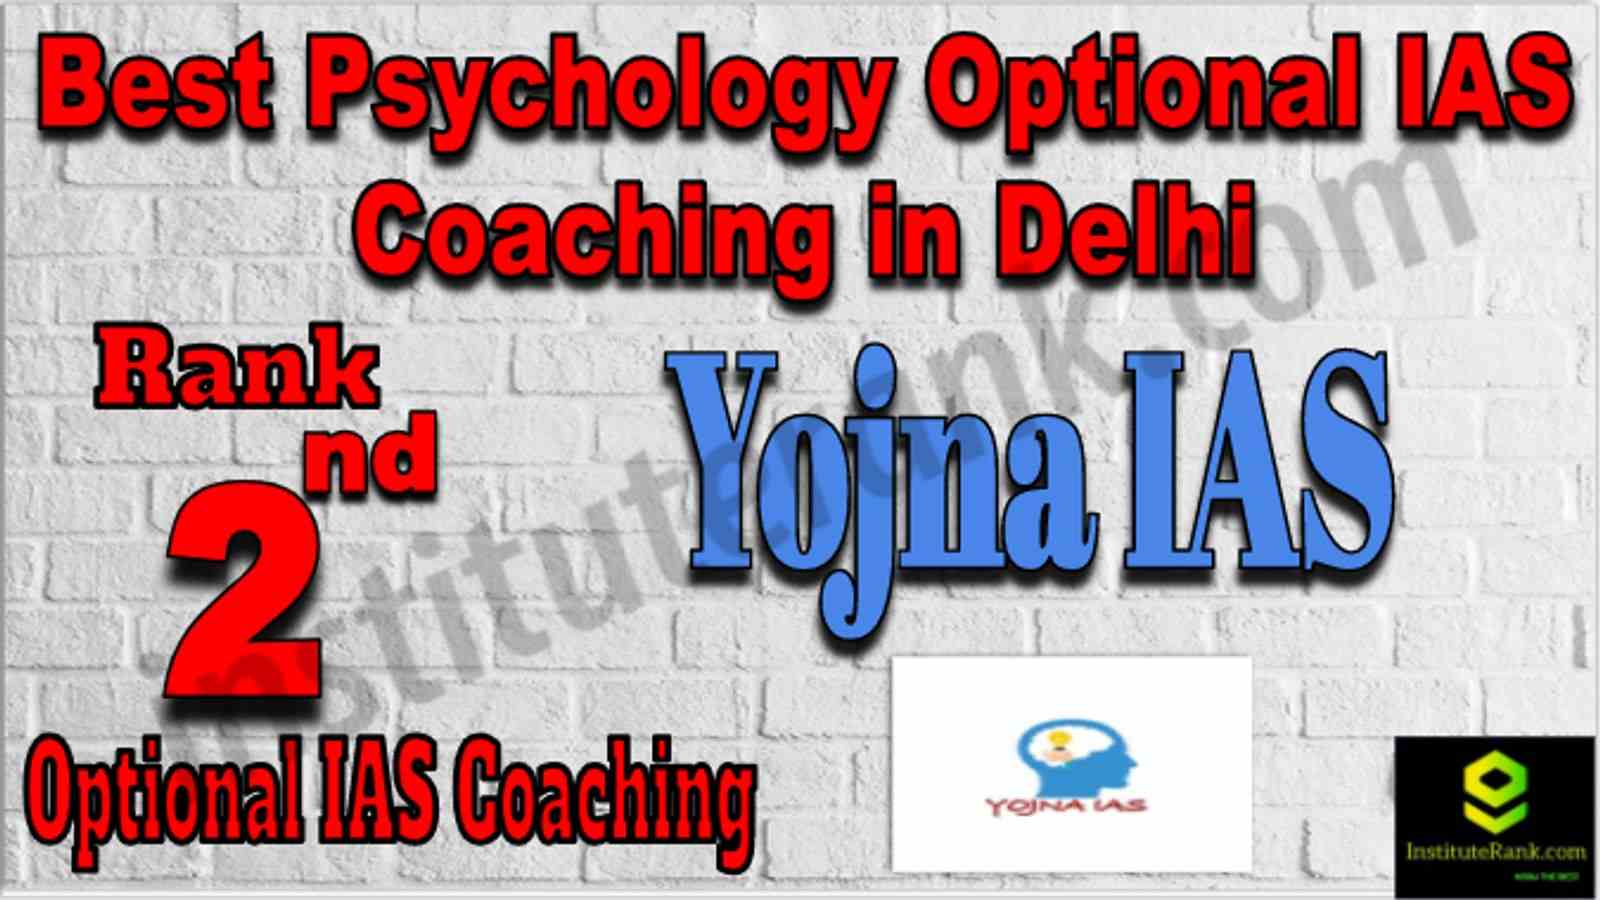 Rank 2 Best Psychology Optional IAS Coaching in Delhi